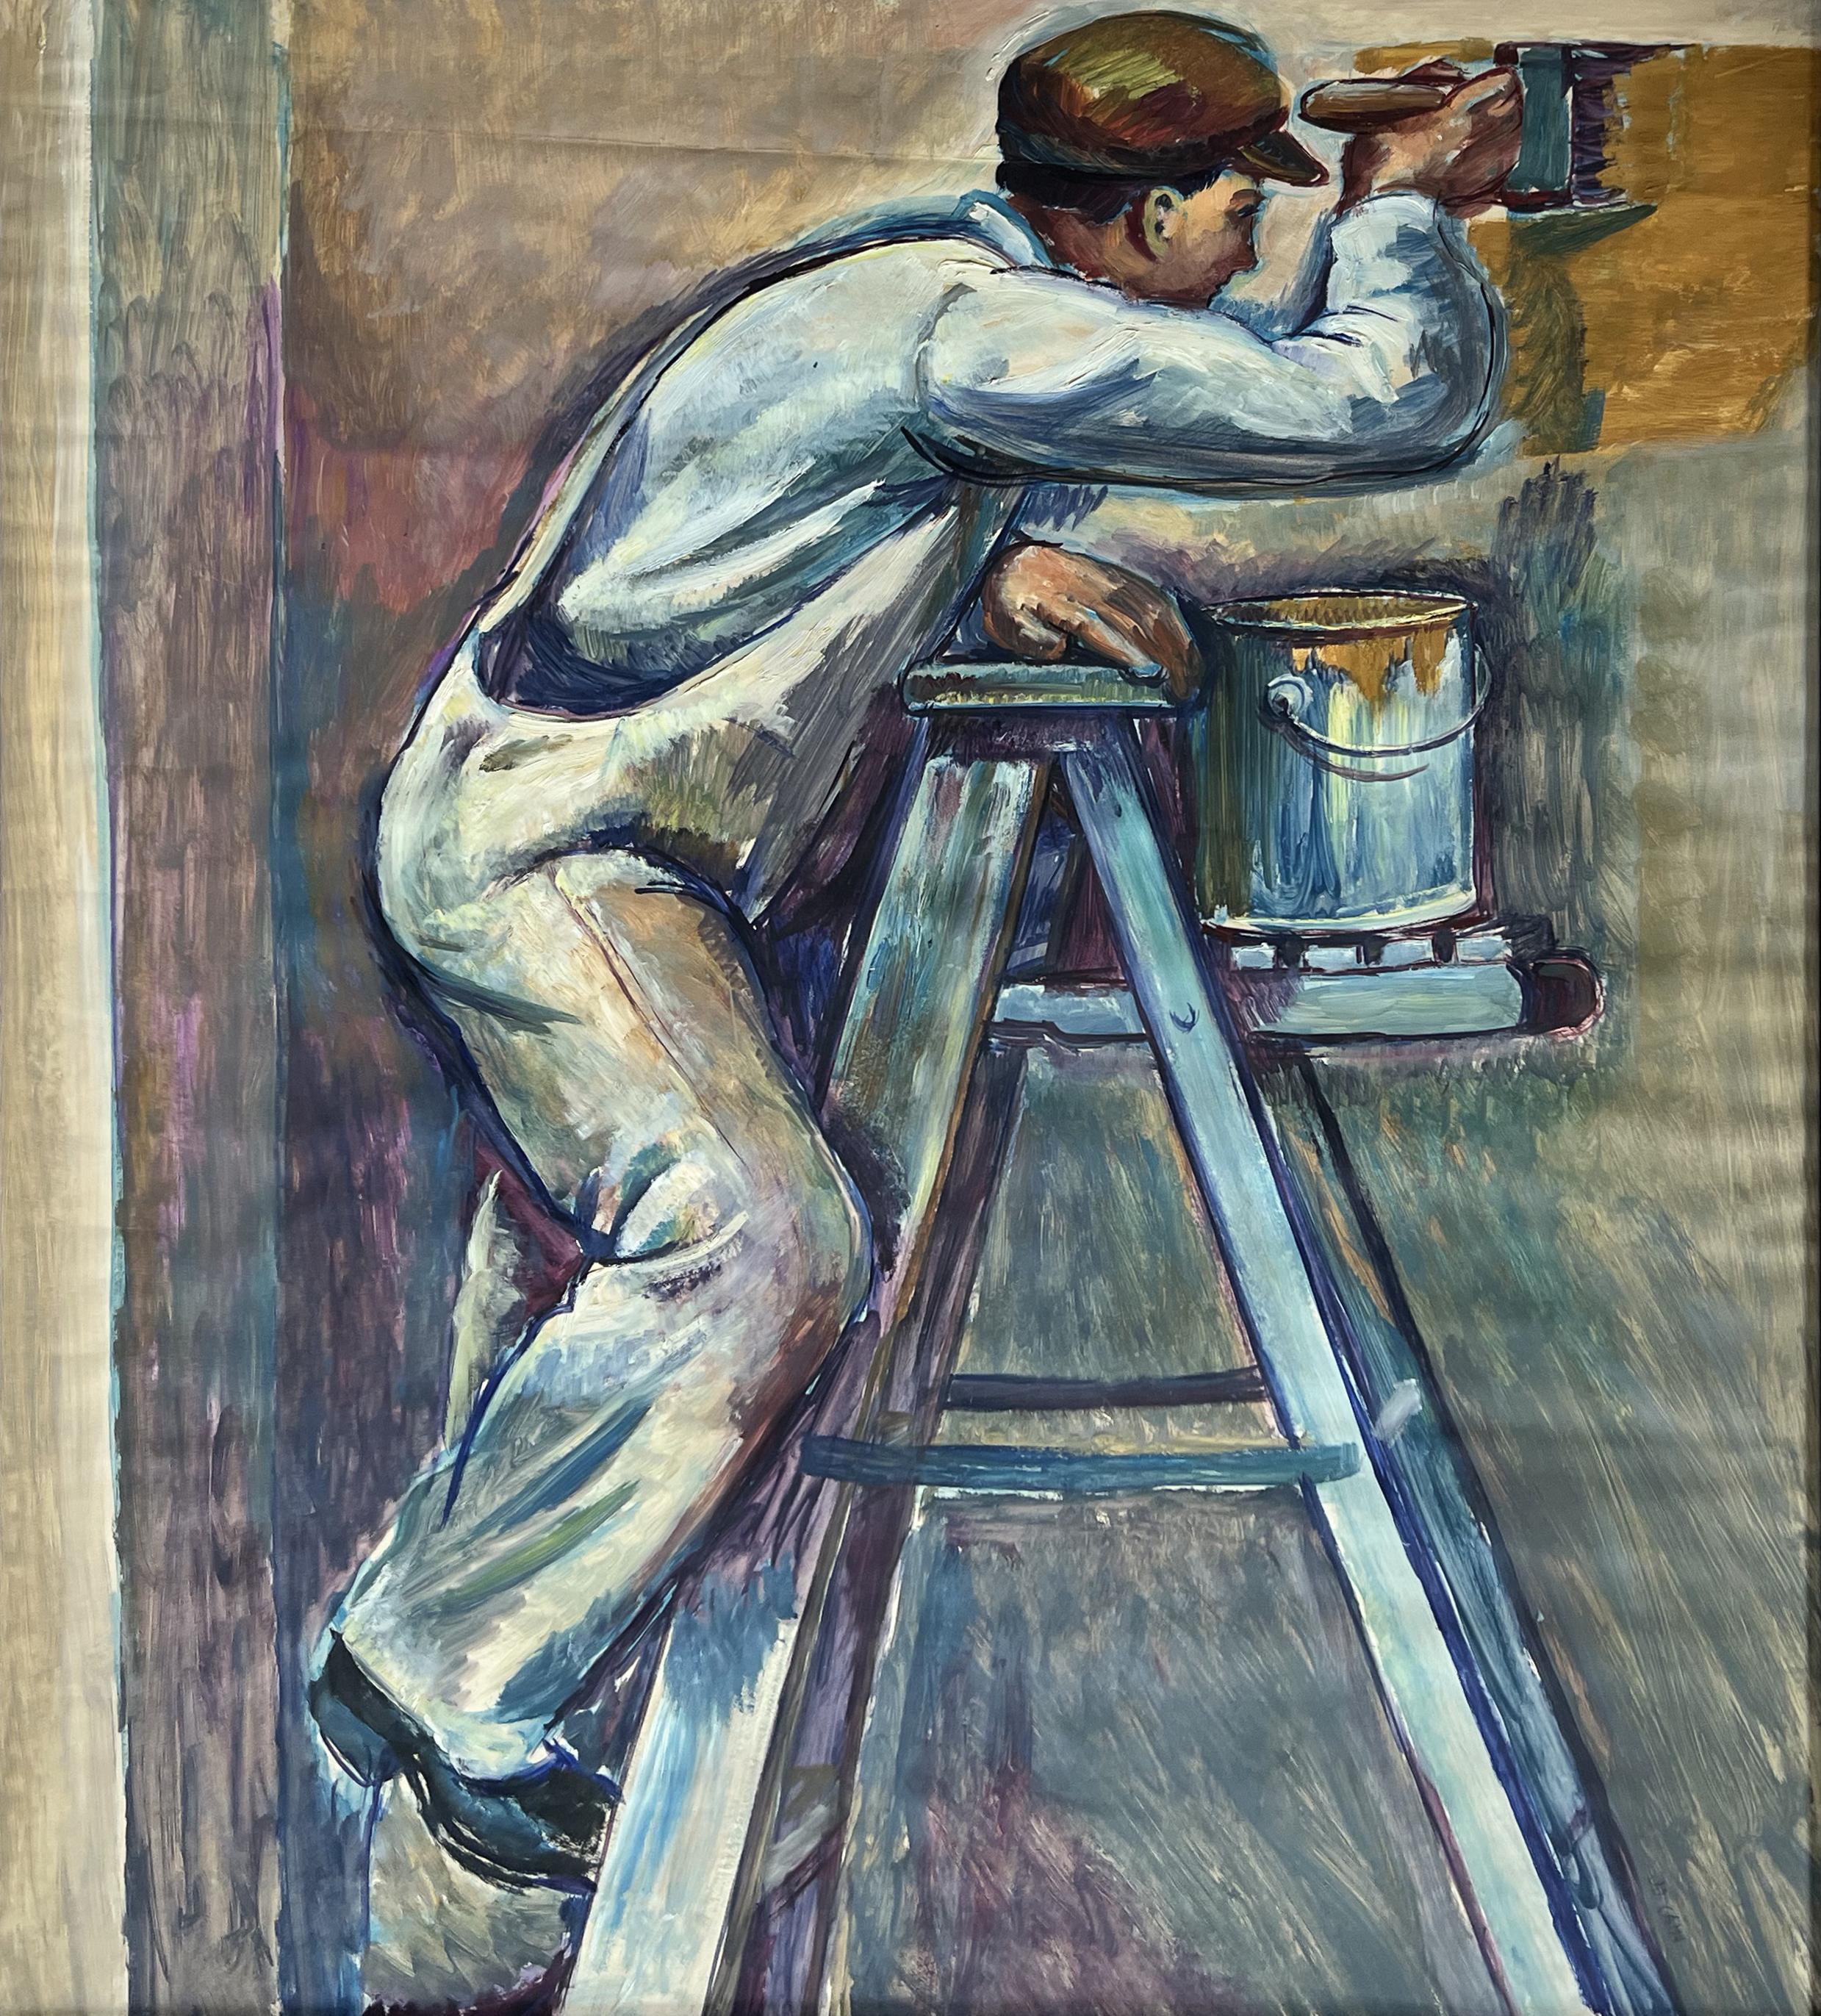 Jo Cain Interior Art - "Painter" 20th Century American Scene Social Realism Working Man Modern WPA Era